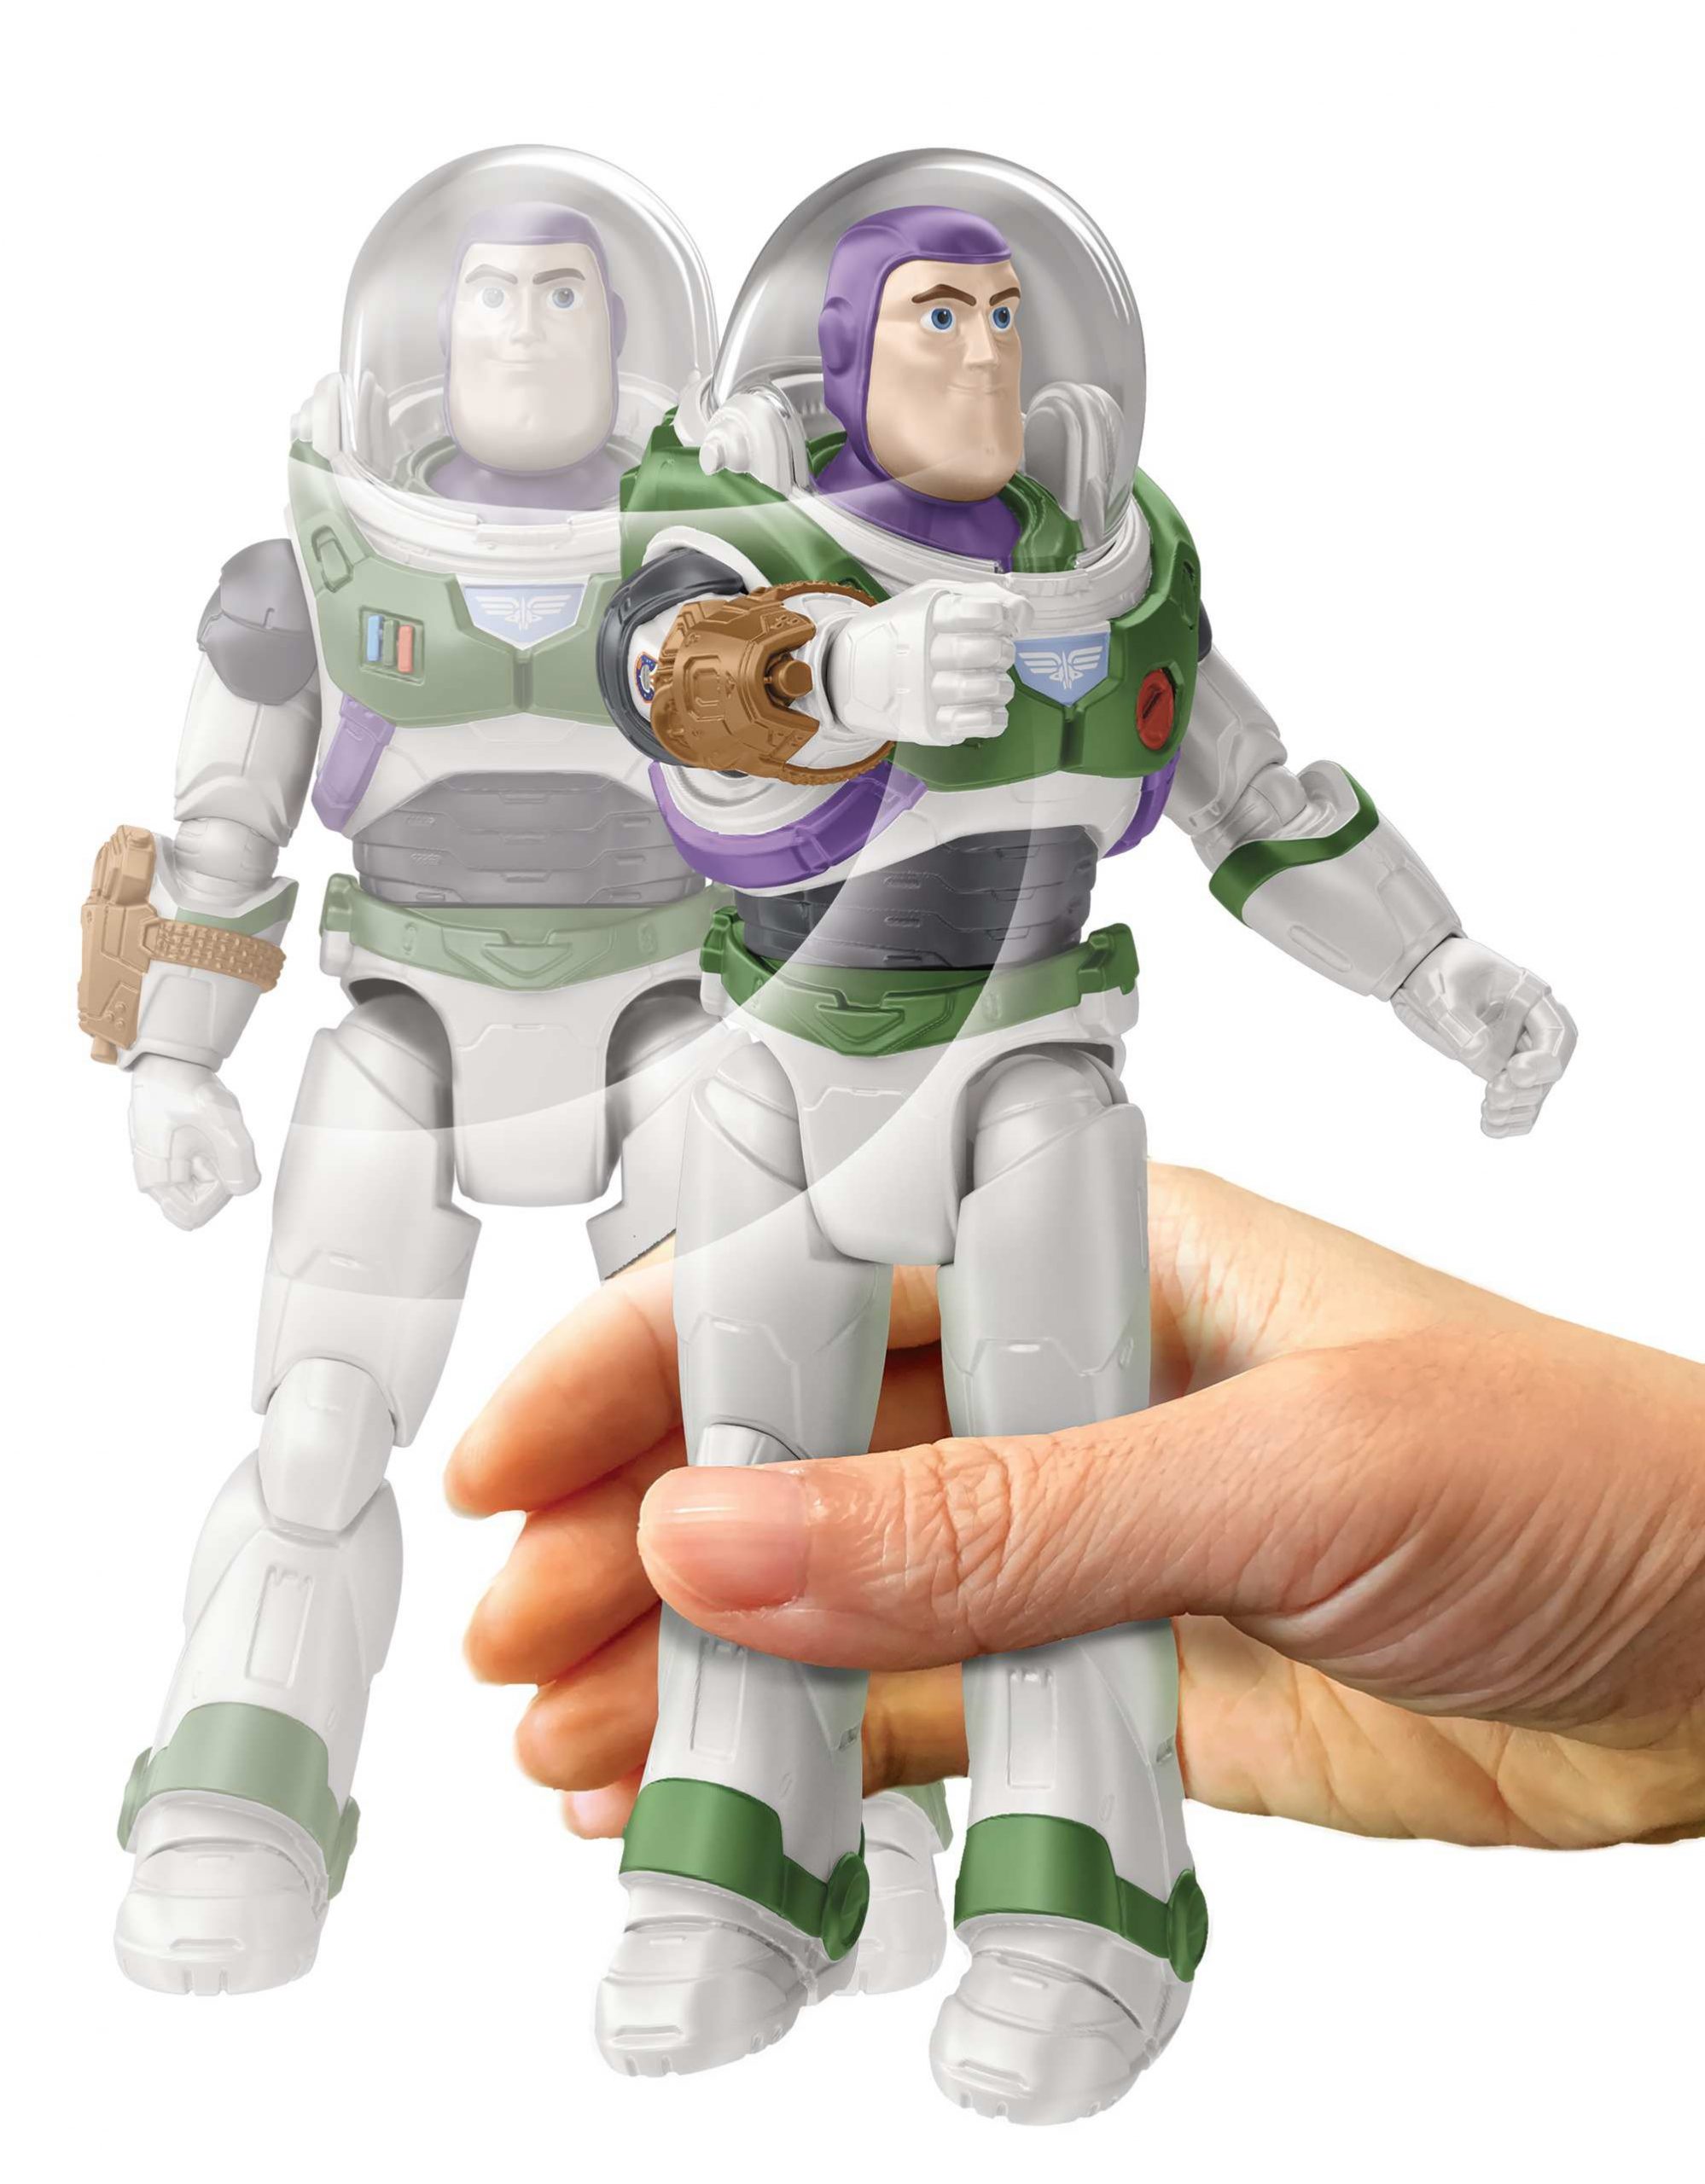 Disney pixar lightyear - mission equipped buzz lightyear figure, giocattolo per bambini 4+ anni, hhj86 - Lightyear